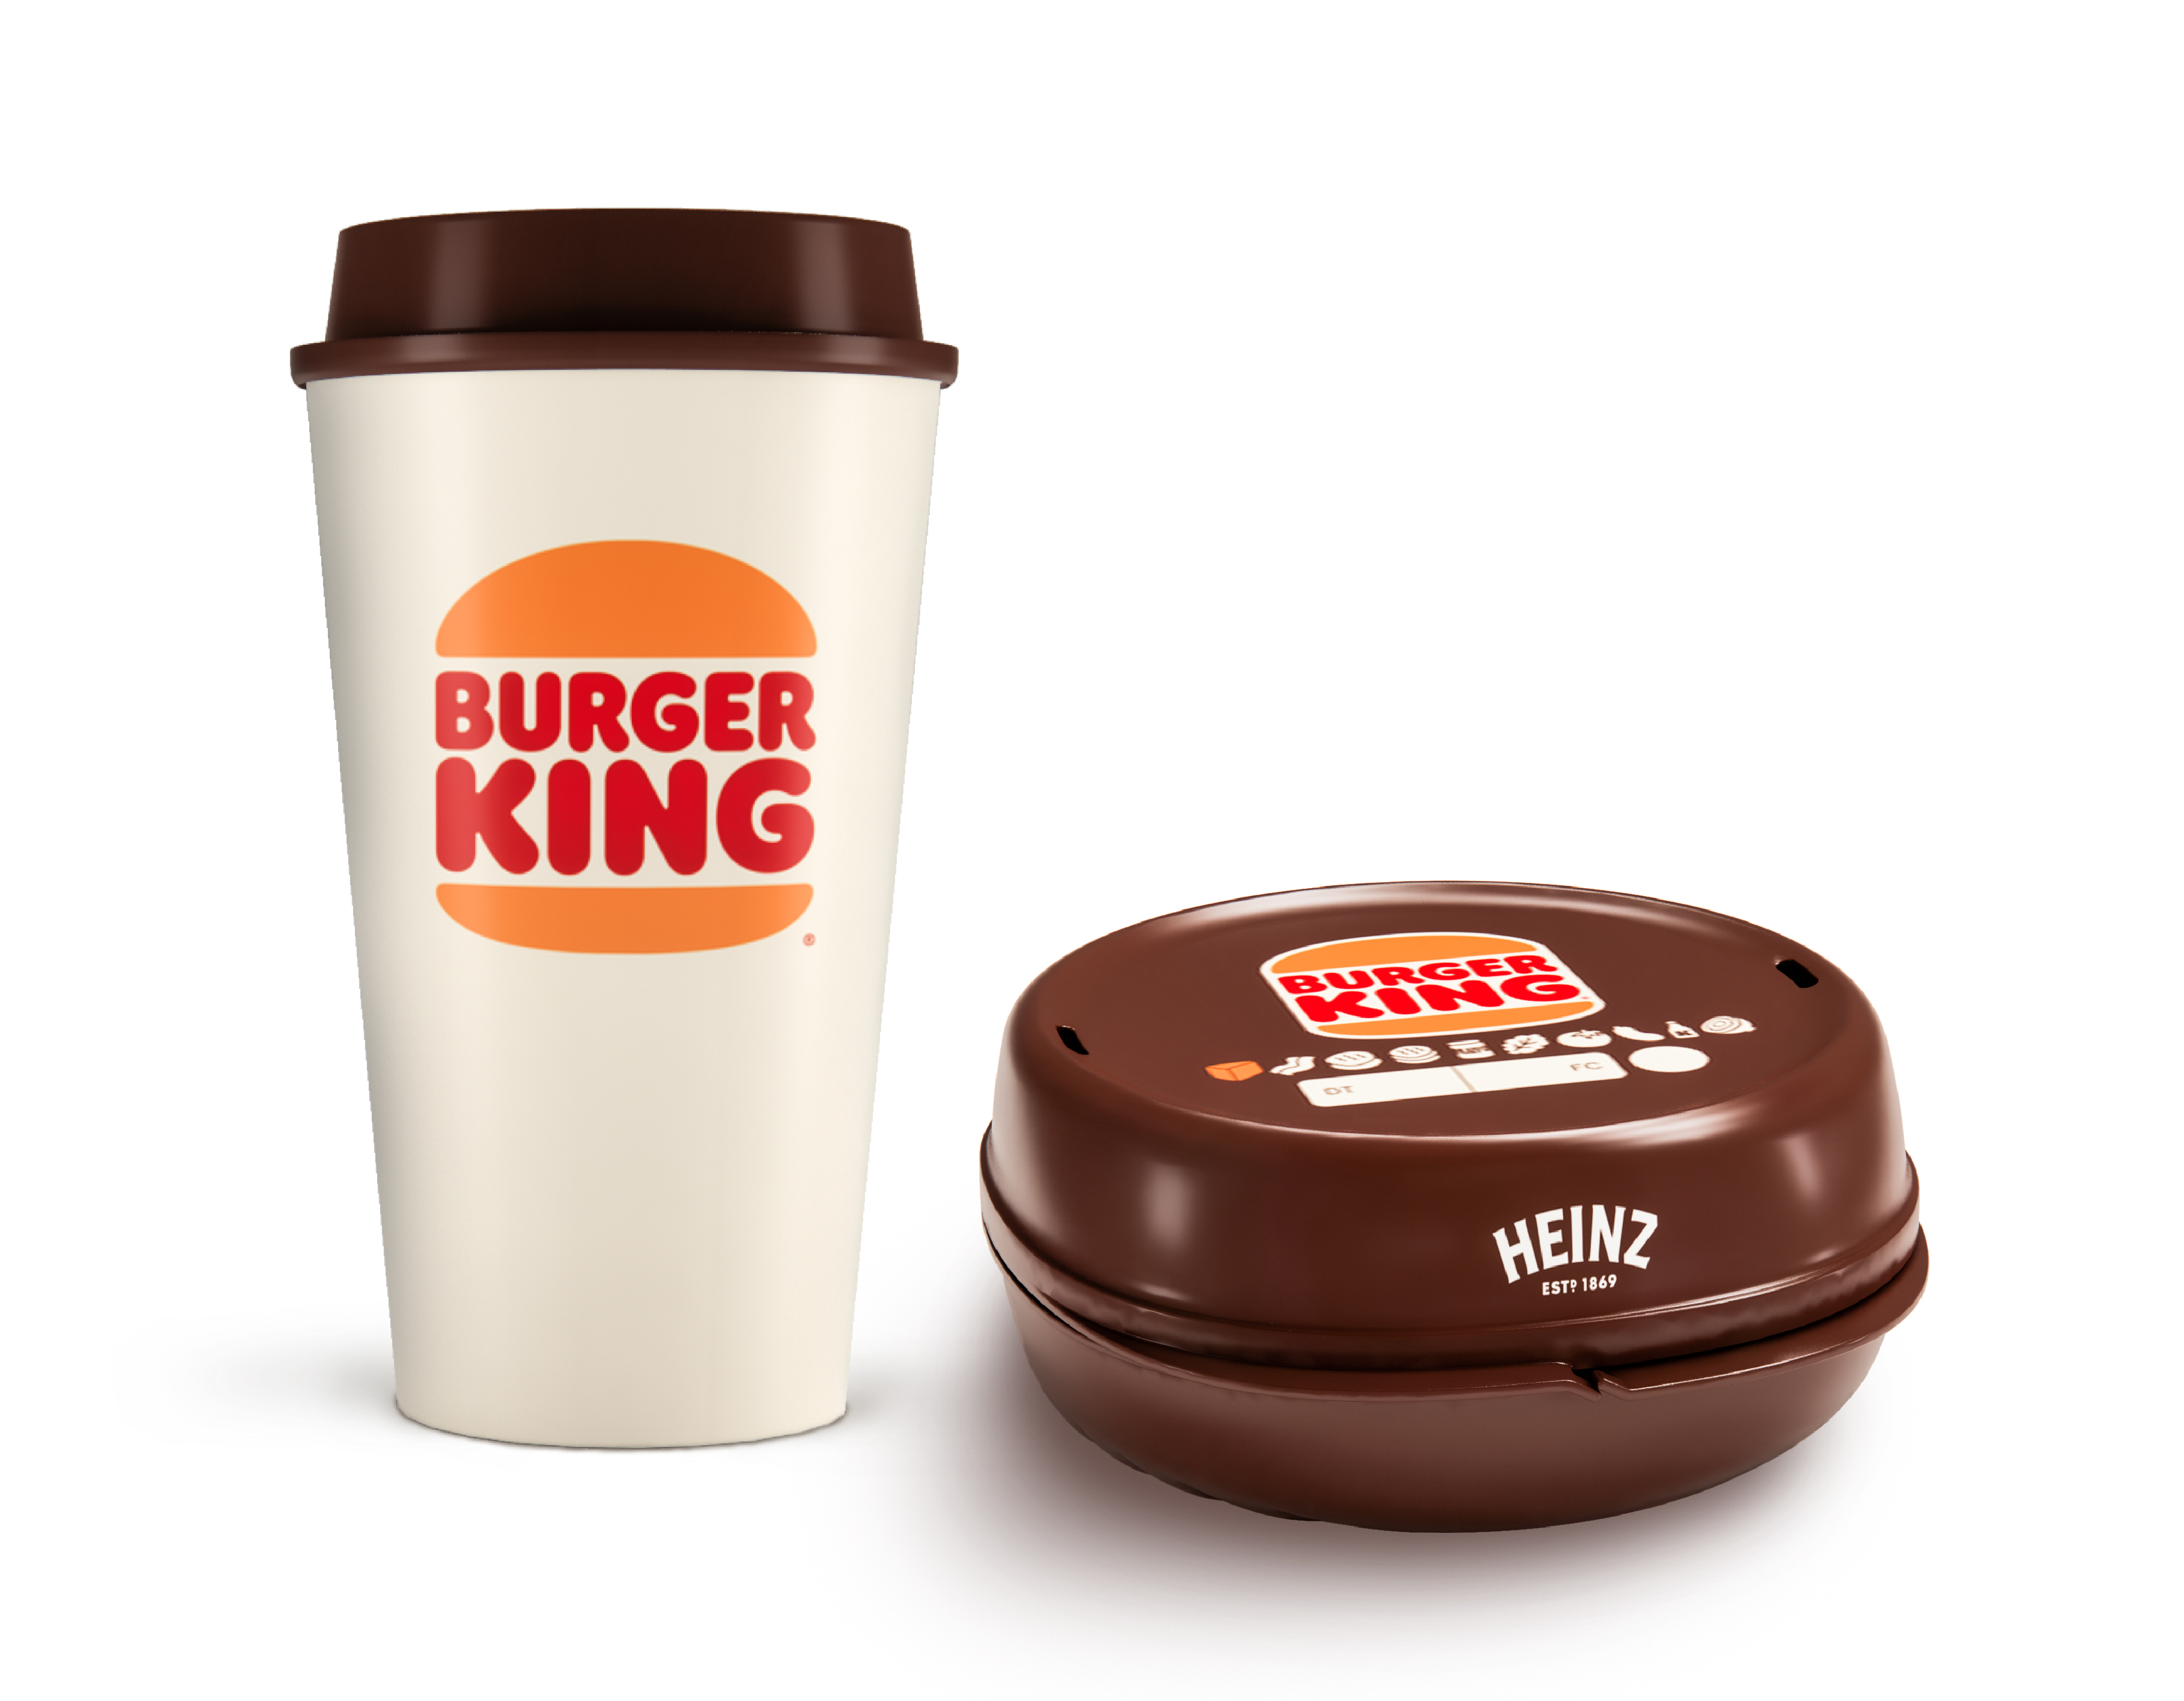 Burger King's reusable packaging